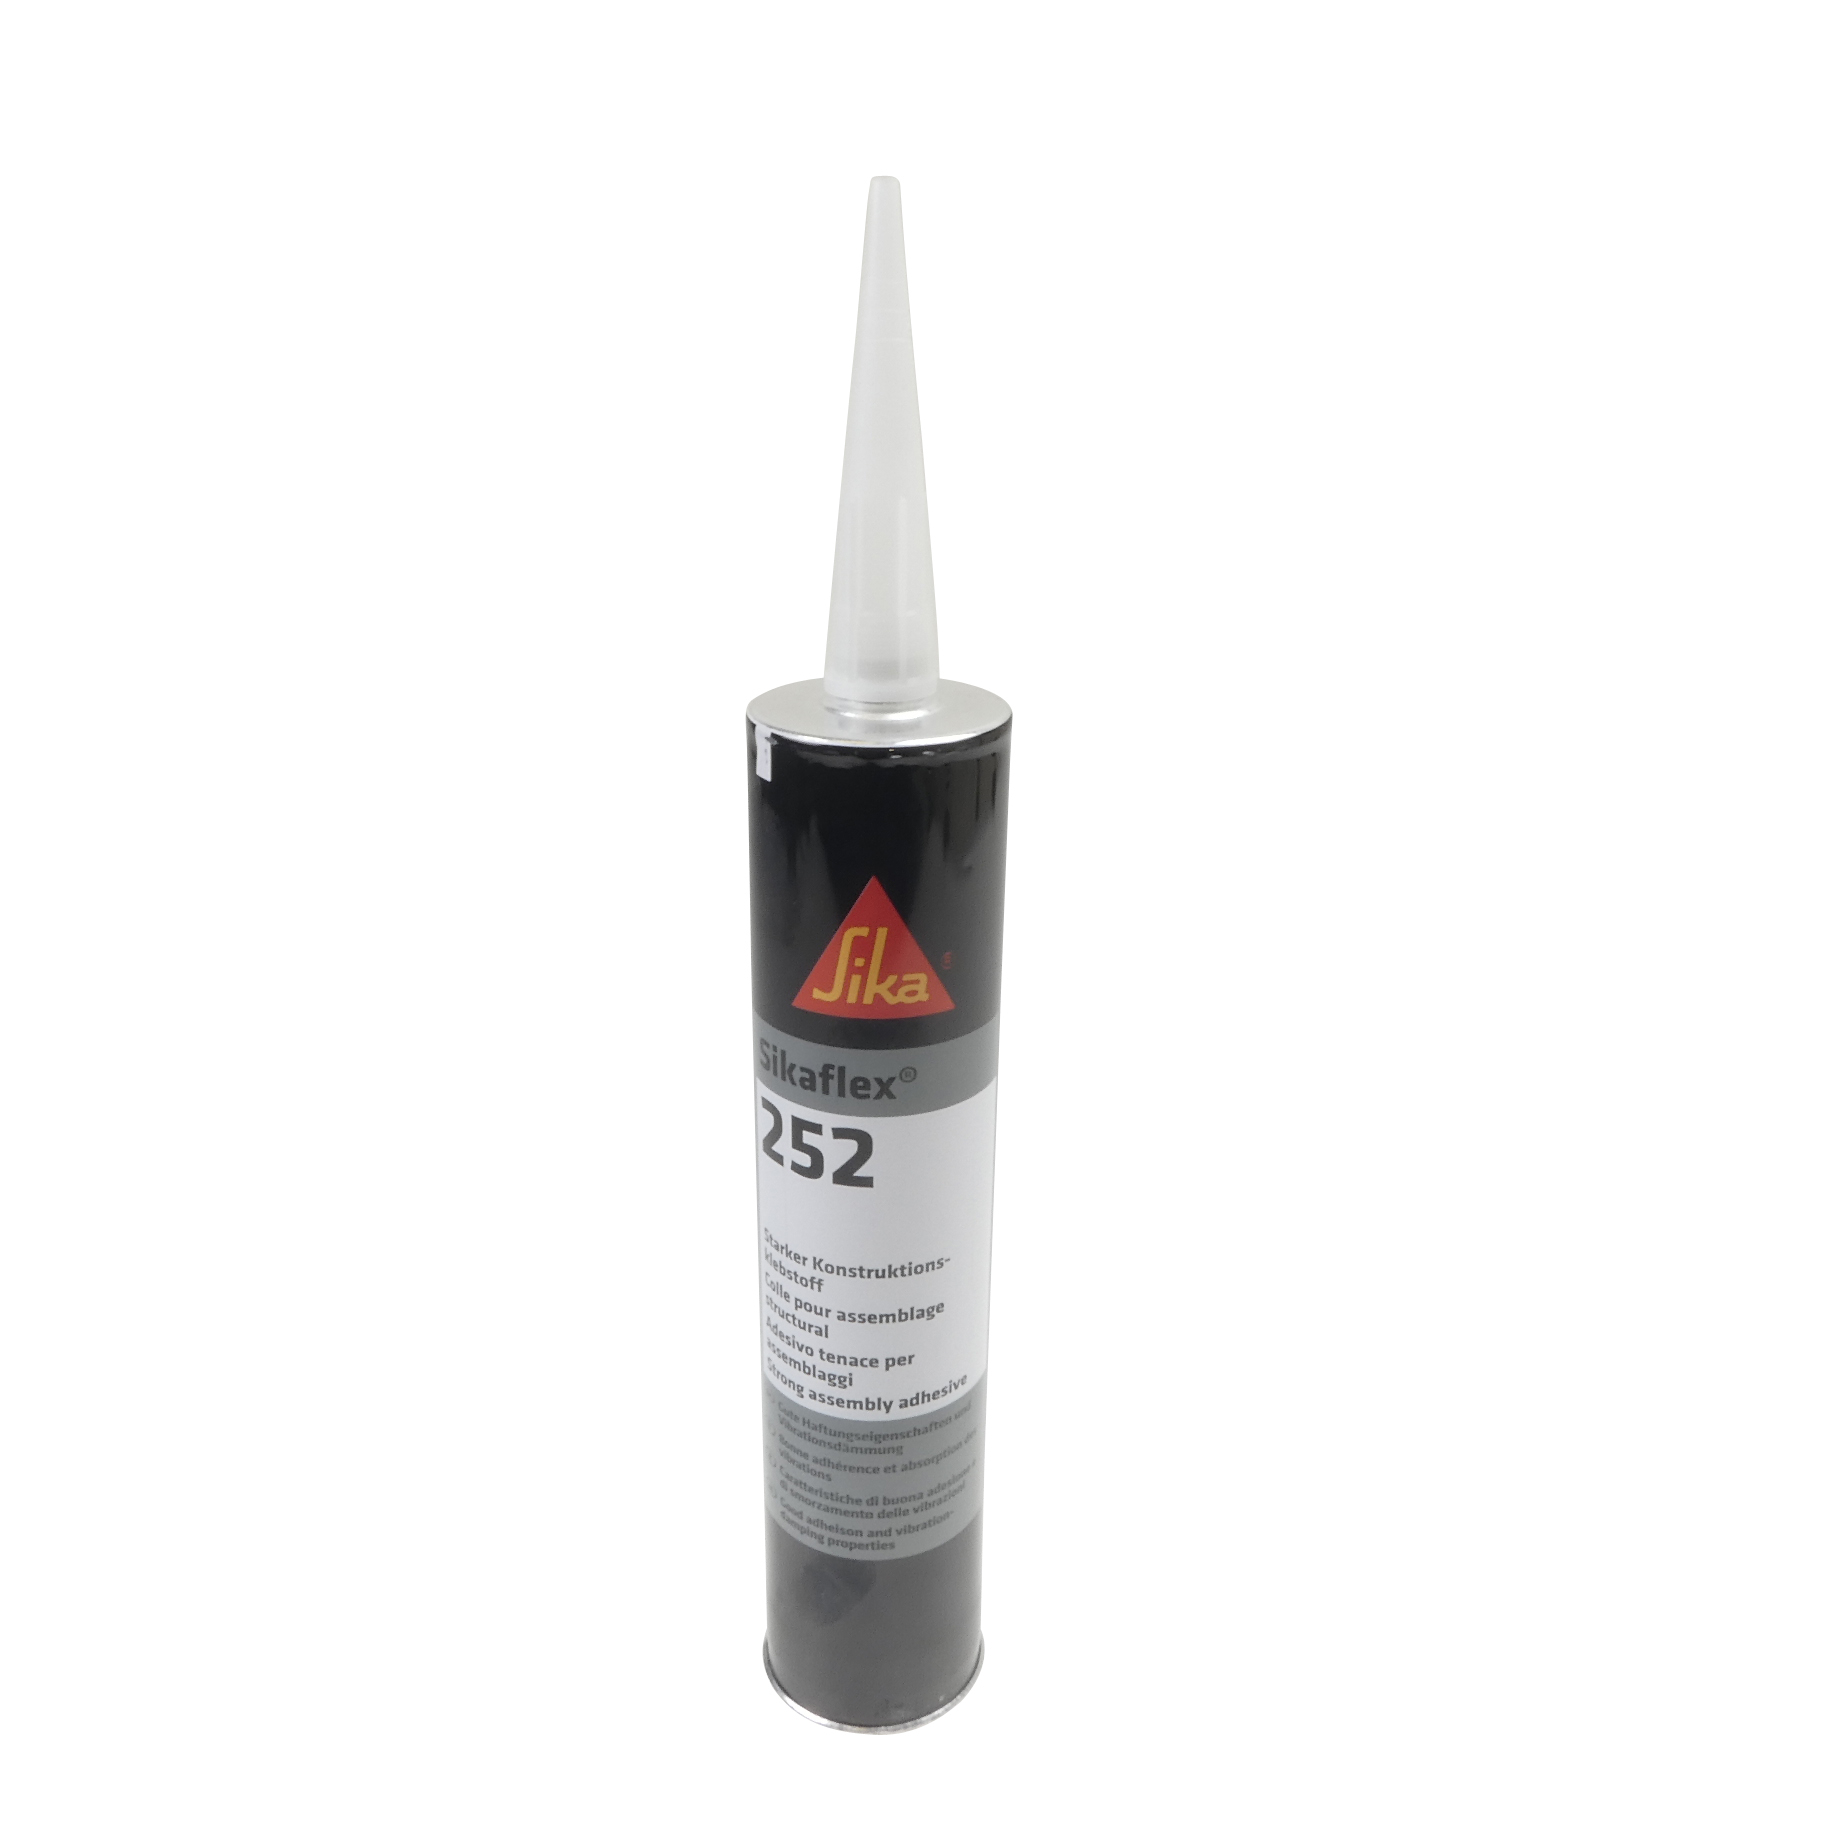 Sikaflex 252 High Strength Adhesive - Black or White